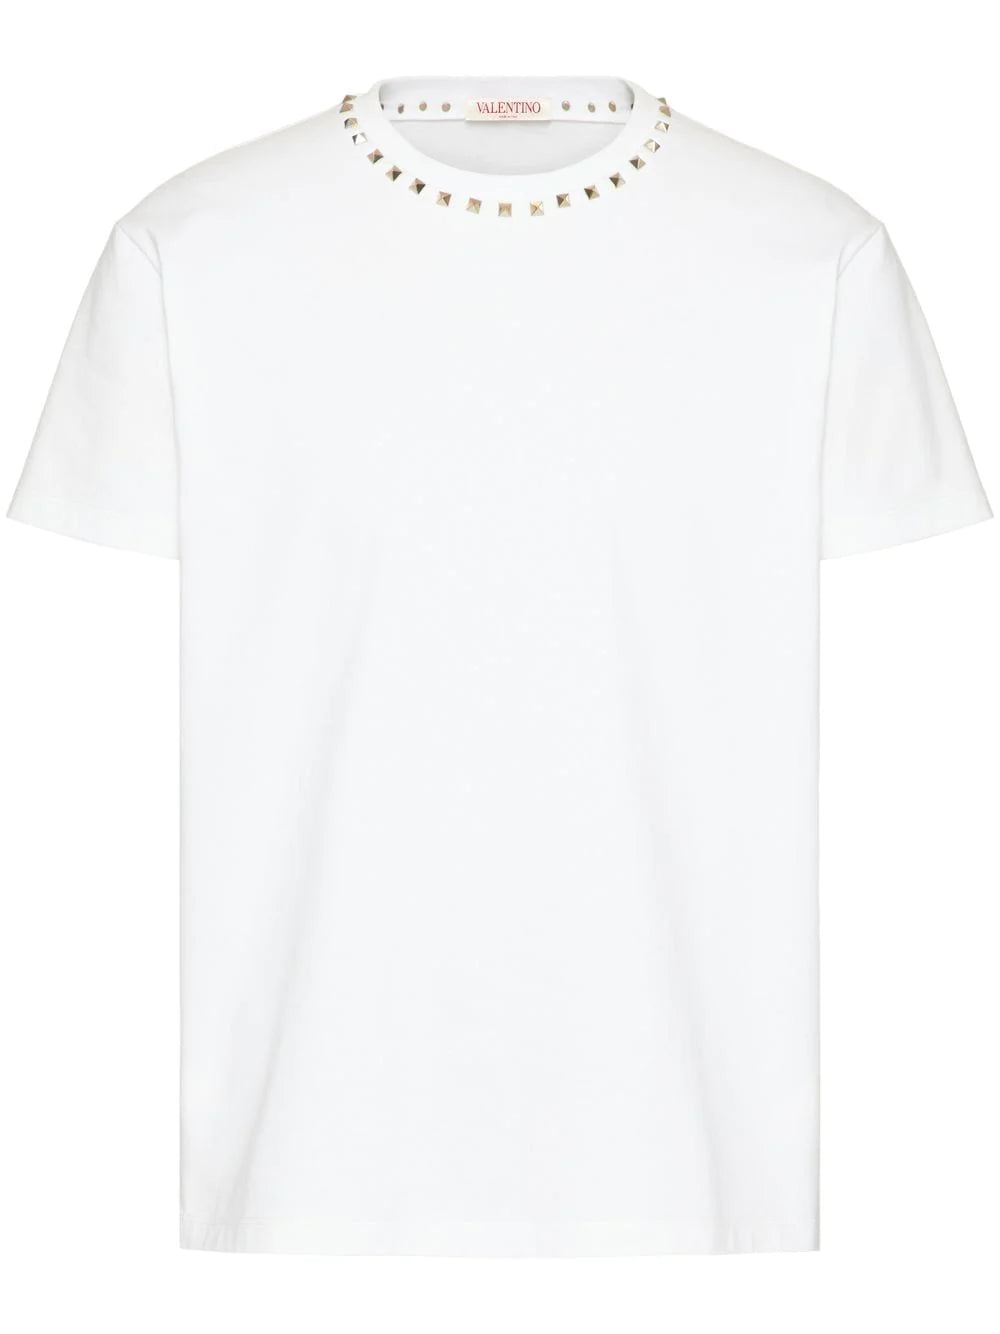 VALENTINO GARAVANI T-shirt in cotone bianco